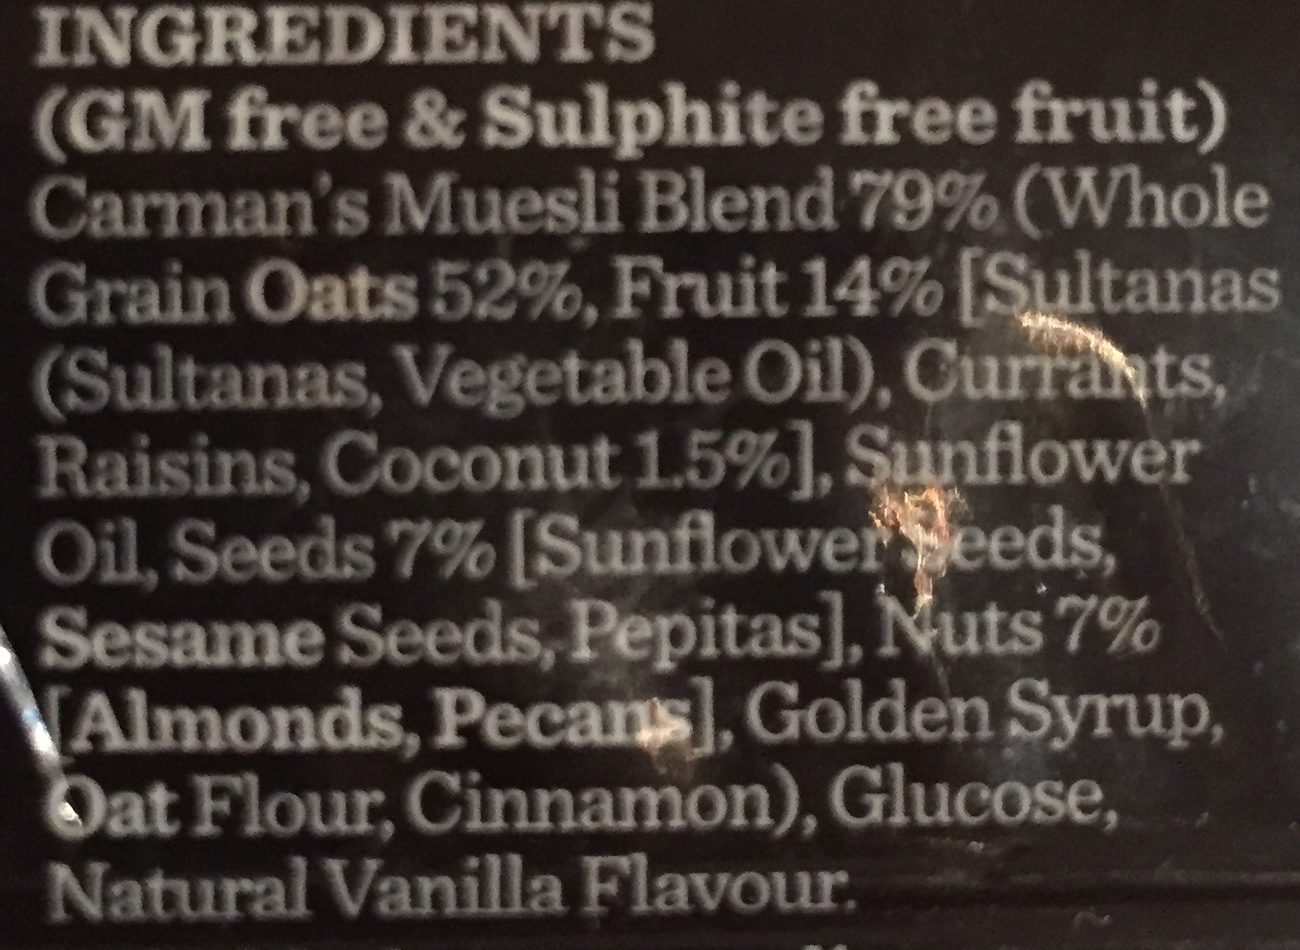 Classic Fruit and Nut Muesli Bar - Ingredients